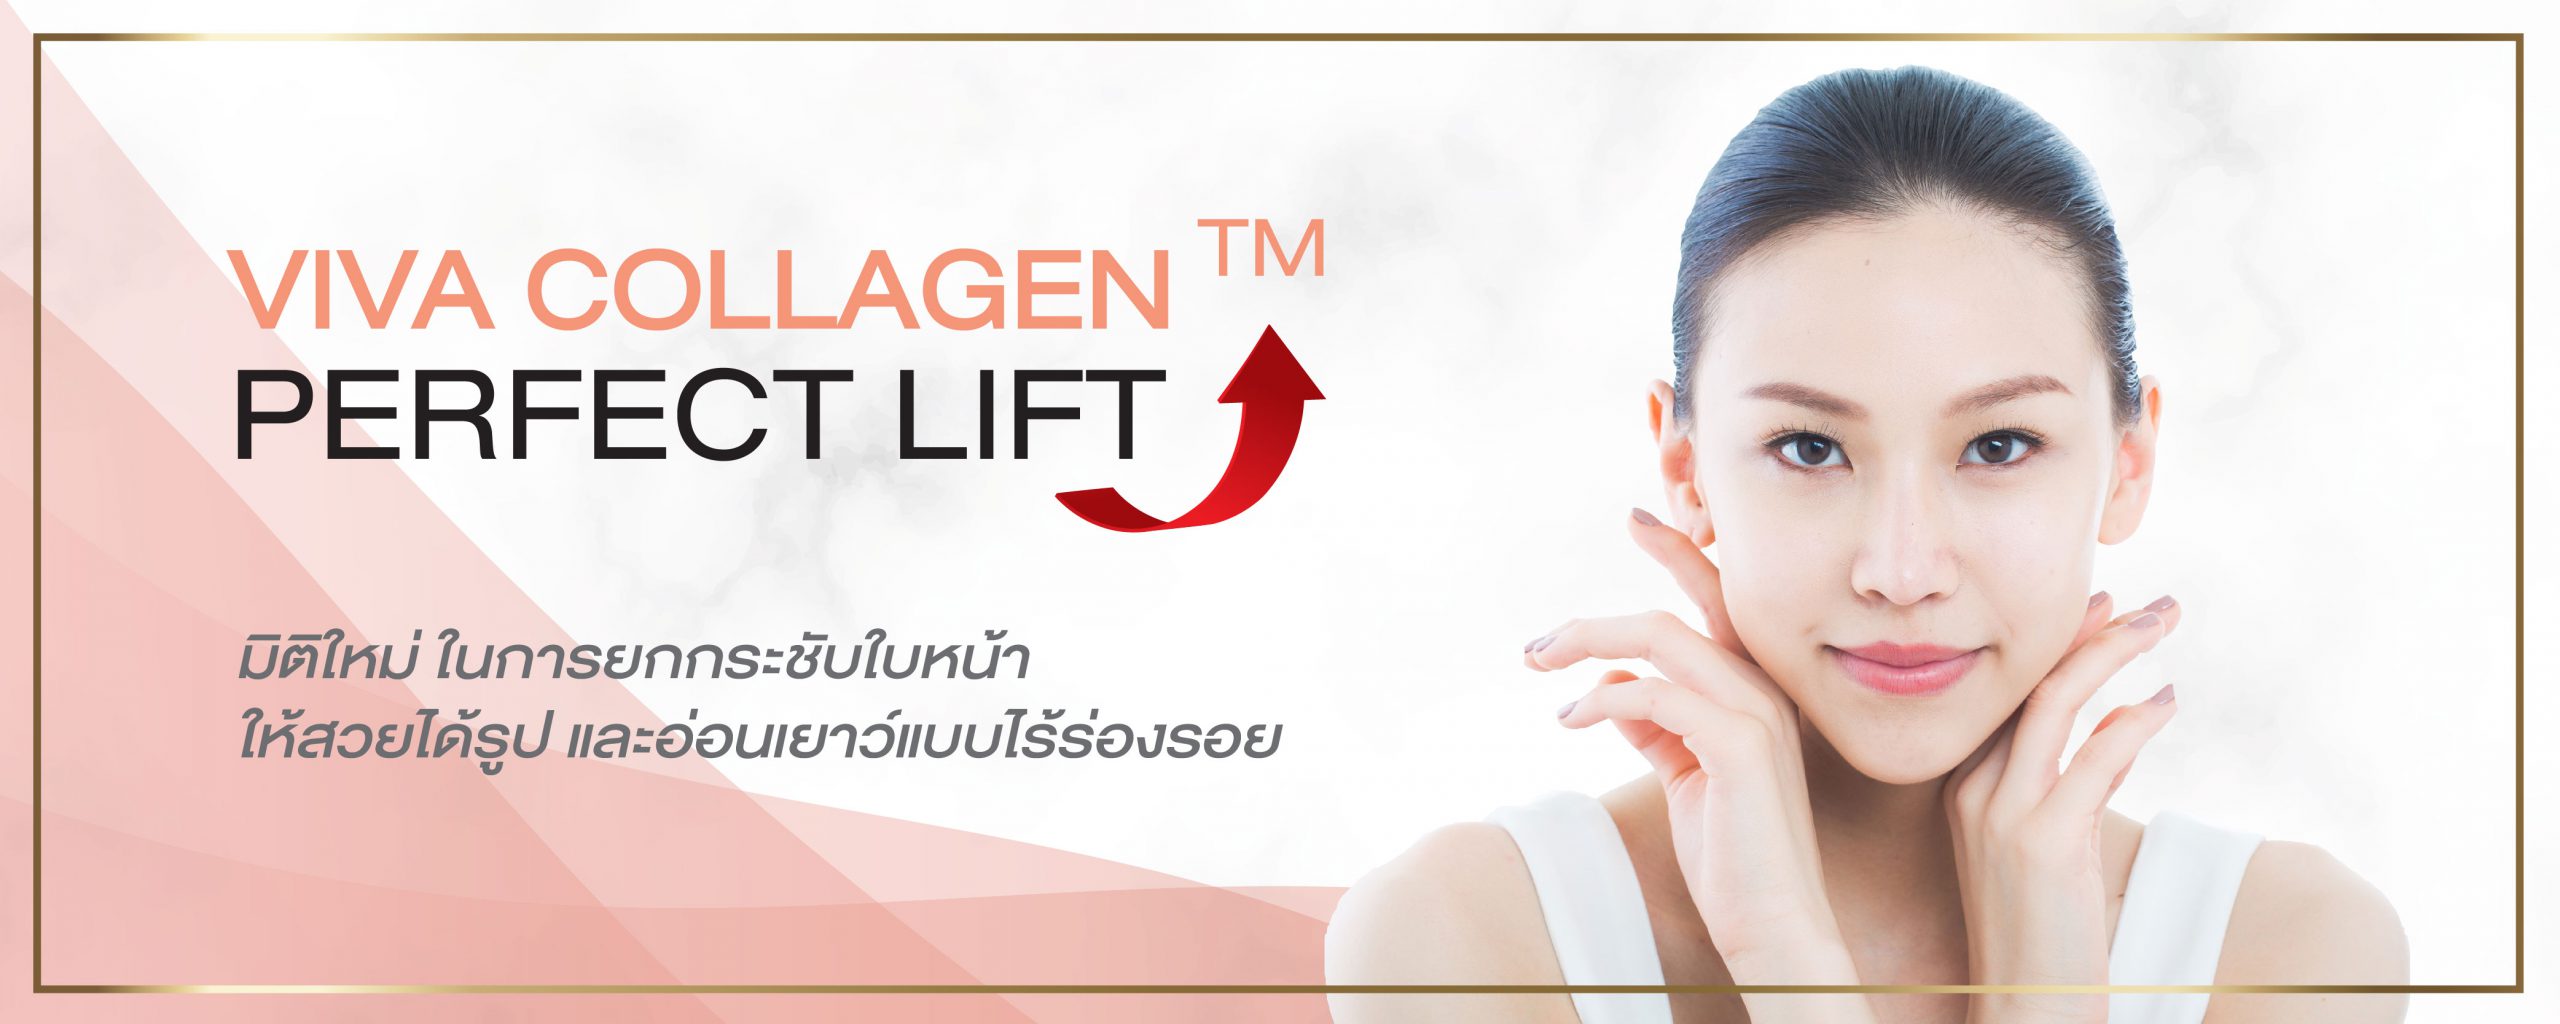 web_perfect lift_1000x400-01